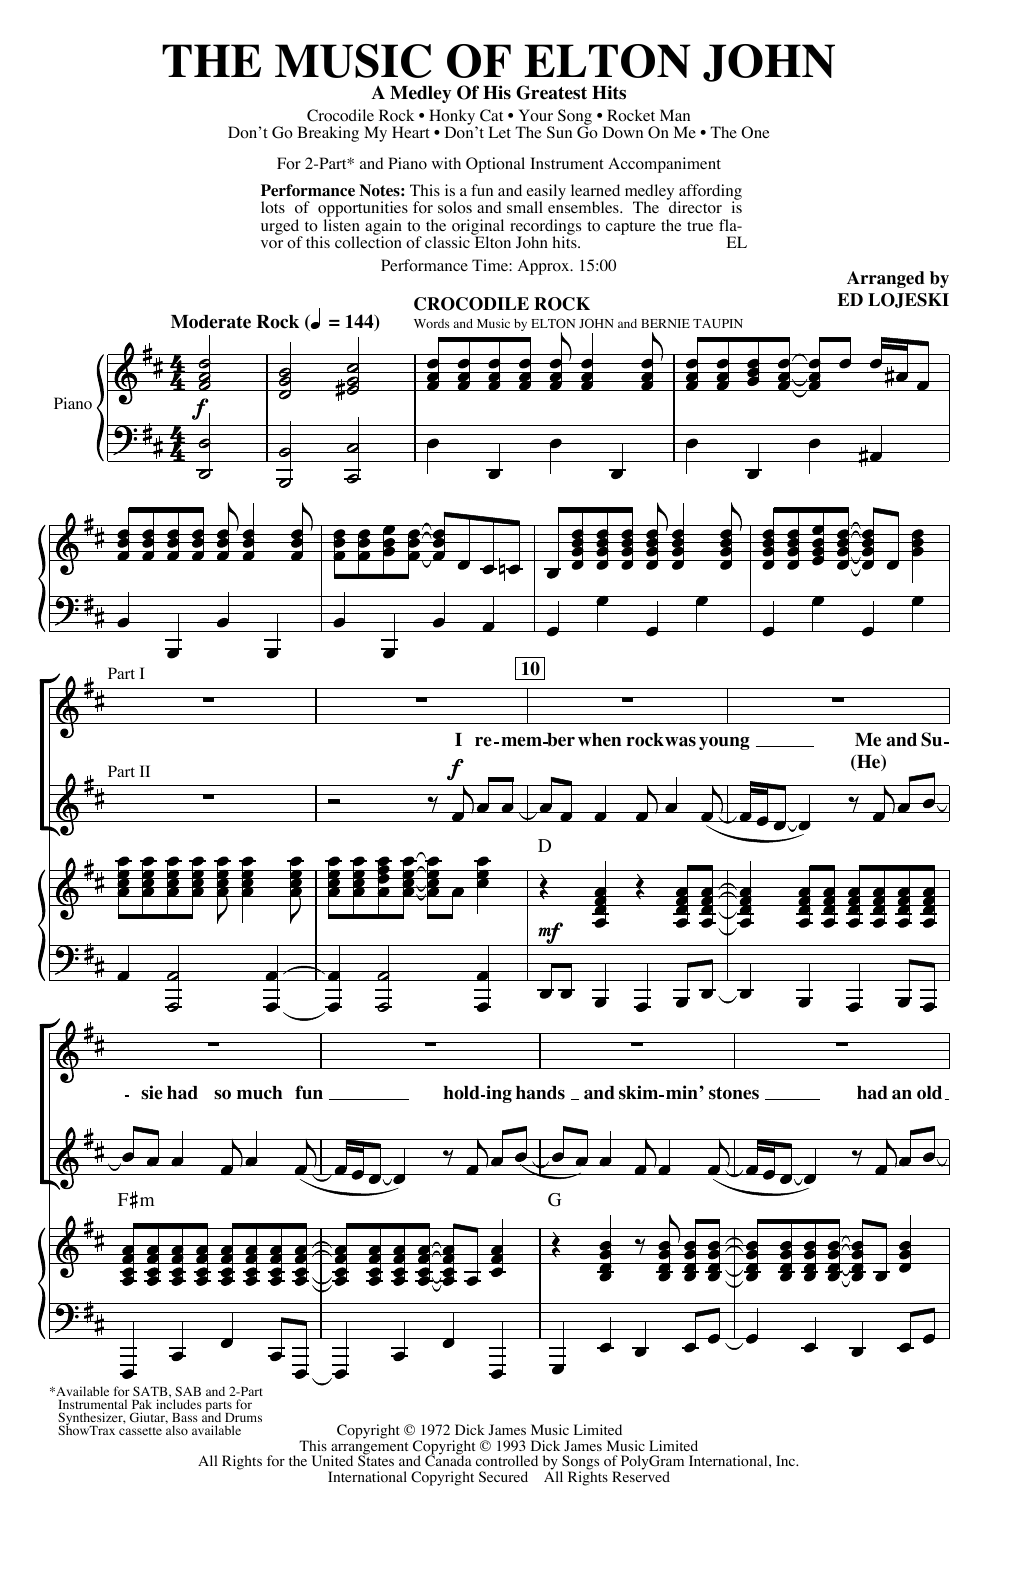 Elton John The Music of Elton John (A Medley Of His Greatest Hits) (arr. Ed Lojeski) Sheet Music Notes & Chords for SAB Choir - Download or Print PDF